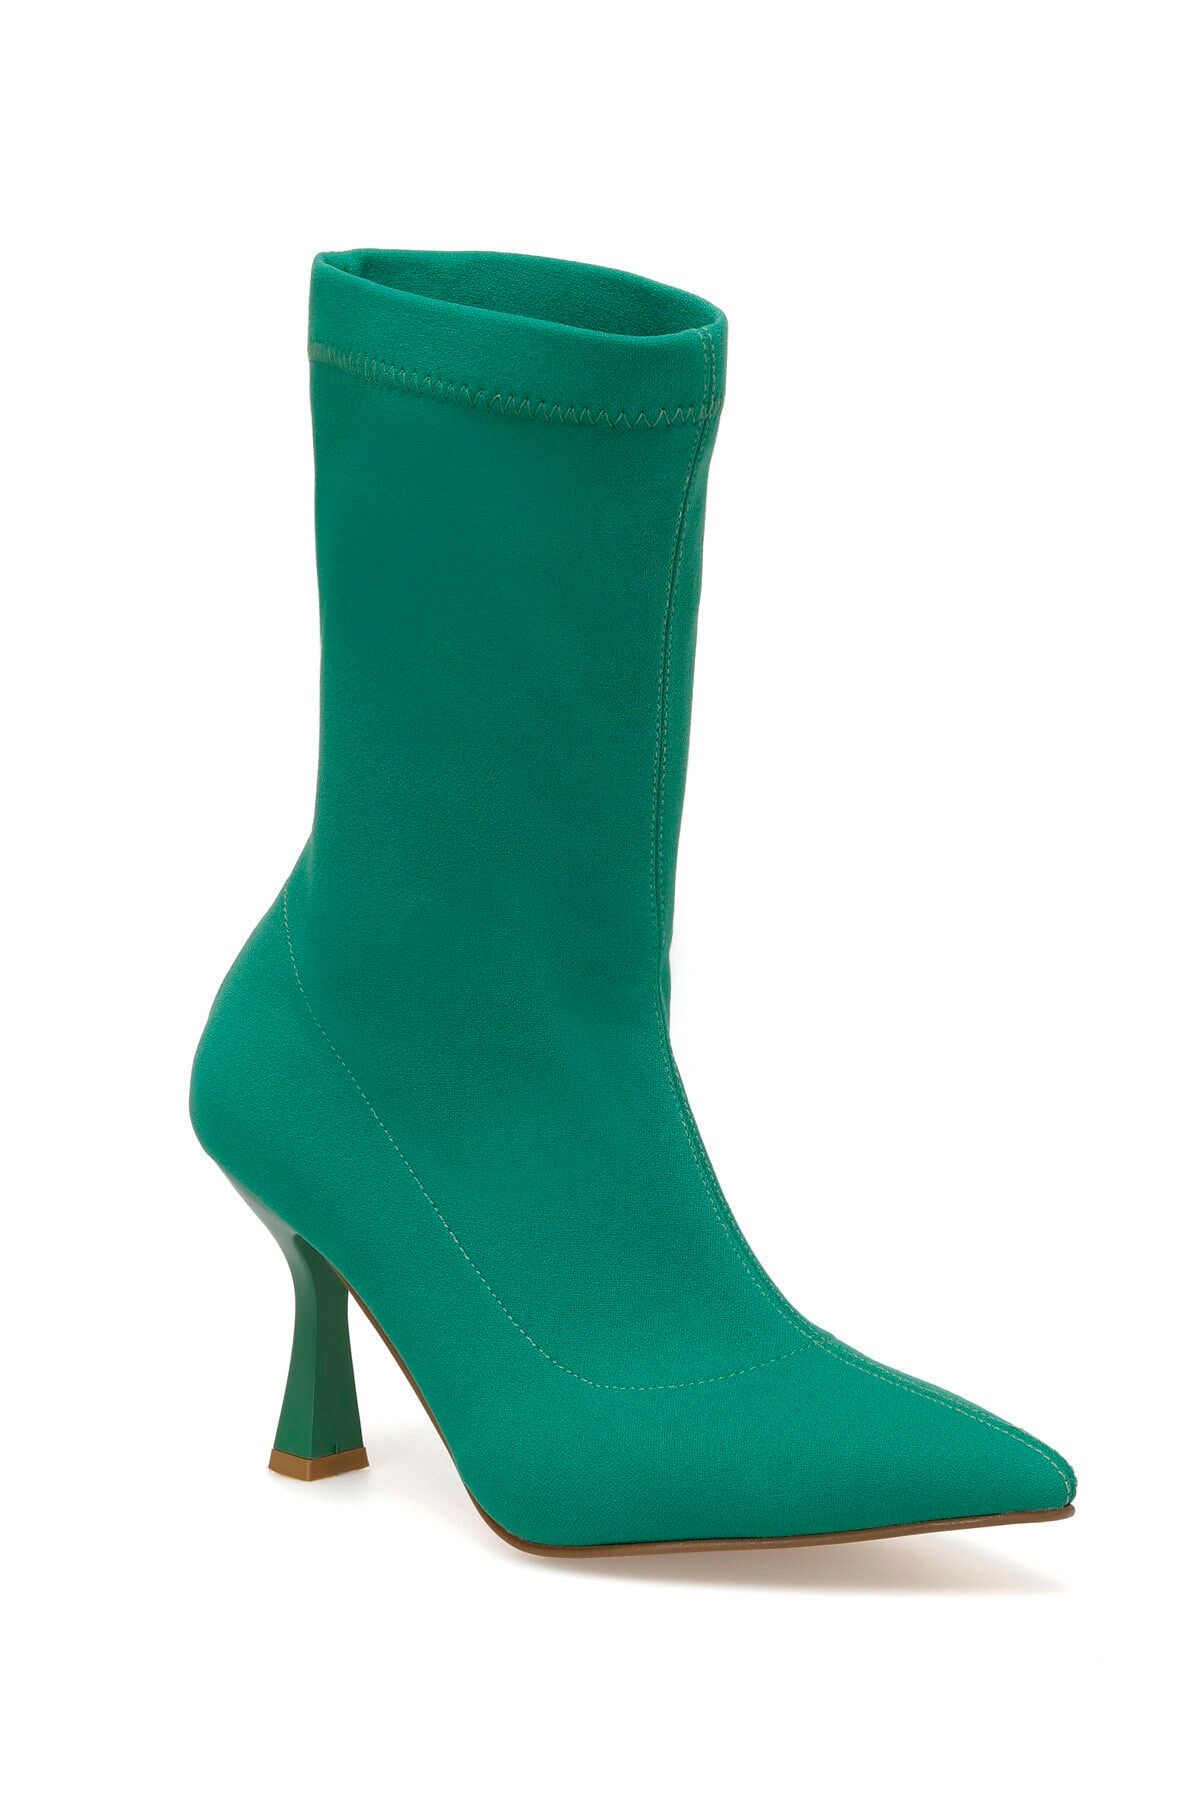 Butigo Fery 2pr Yeşil Kadın Topuklu Çizme